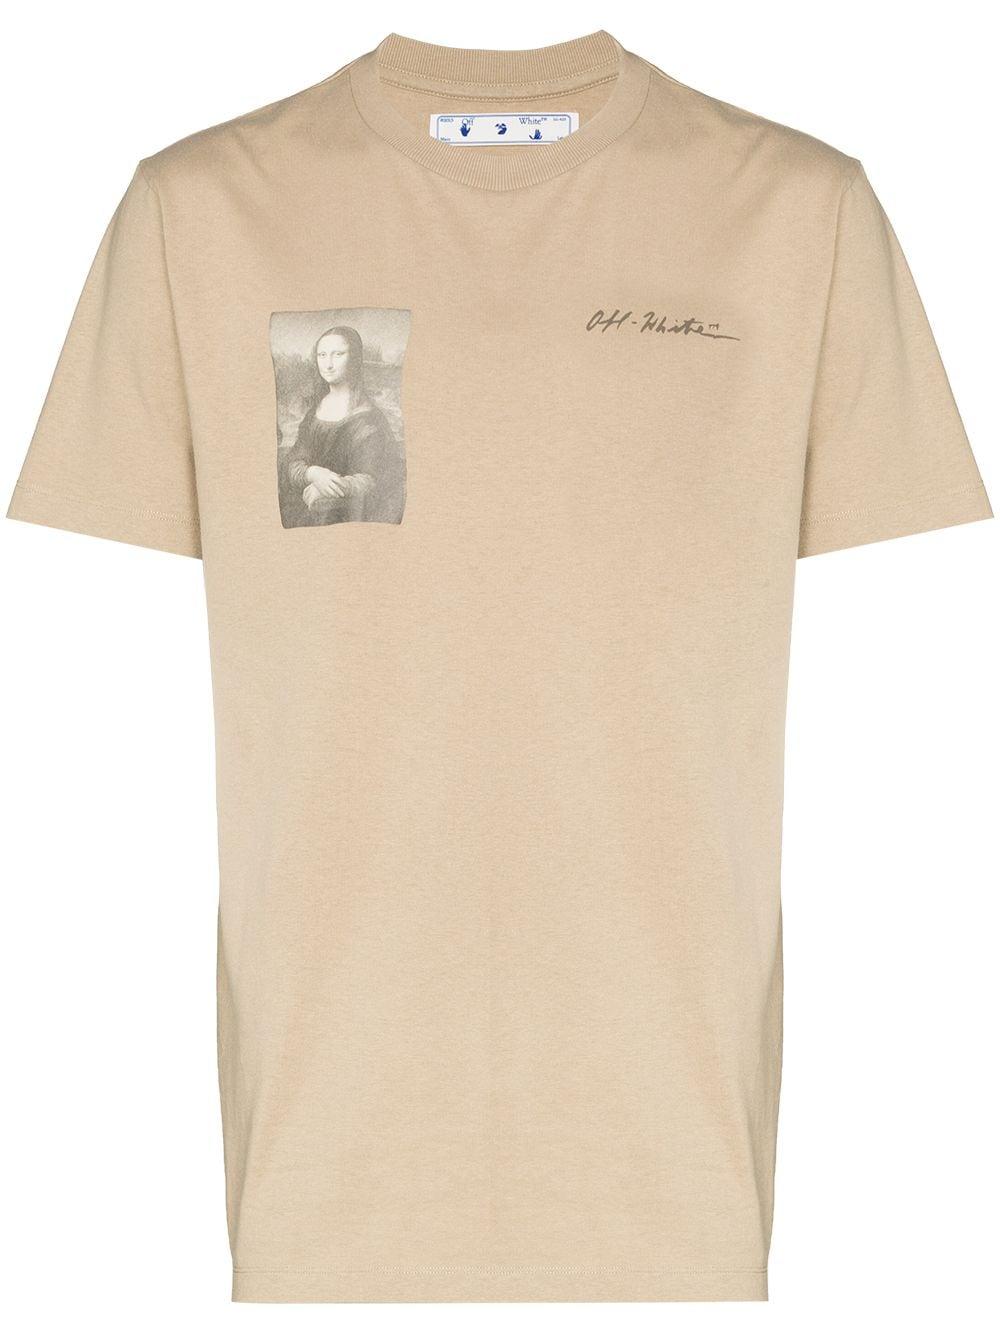 Off-White c/o Virgil Abloh X Browns 50 Mona Lisa T-shirt in Green (Natural)  for Men - Lyst